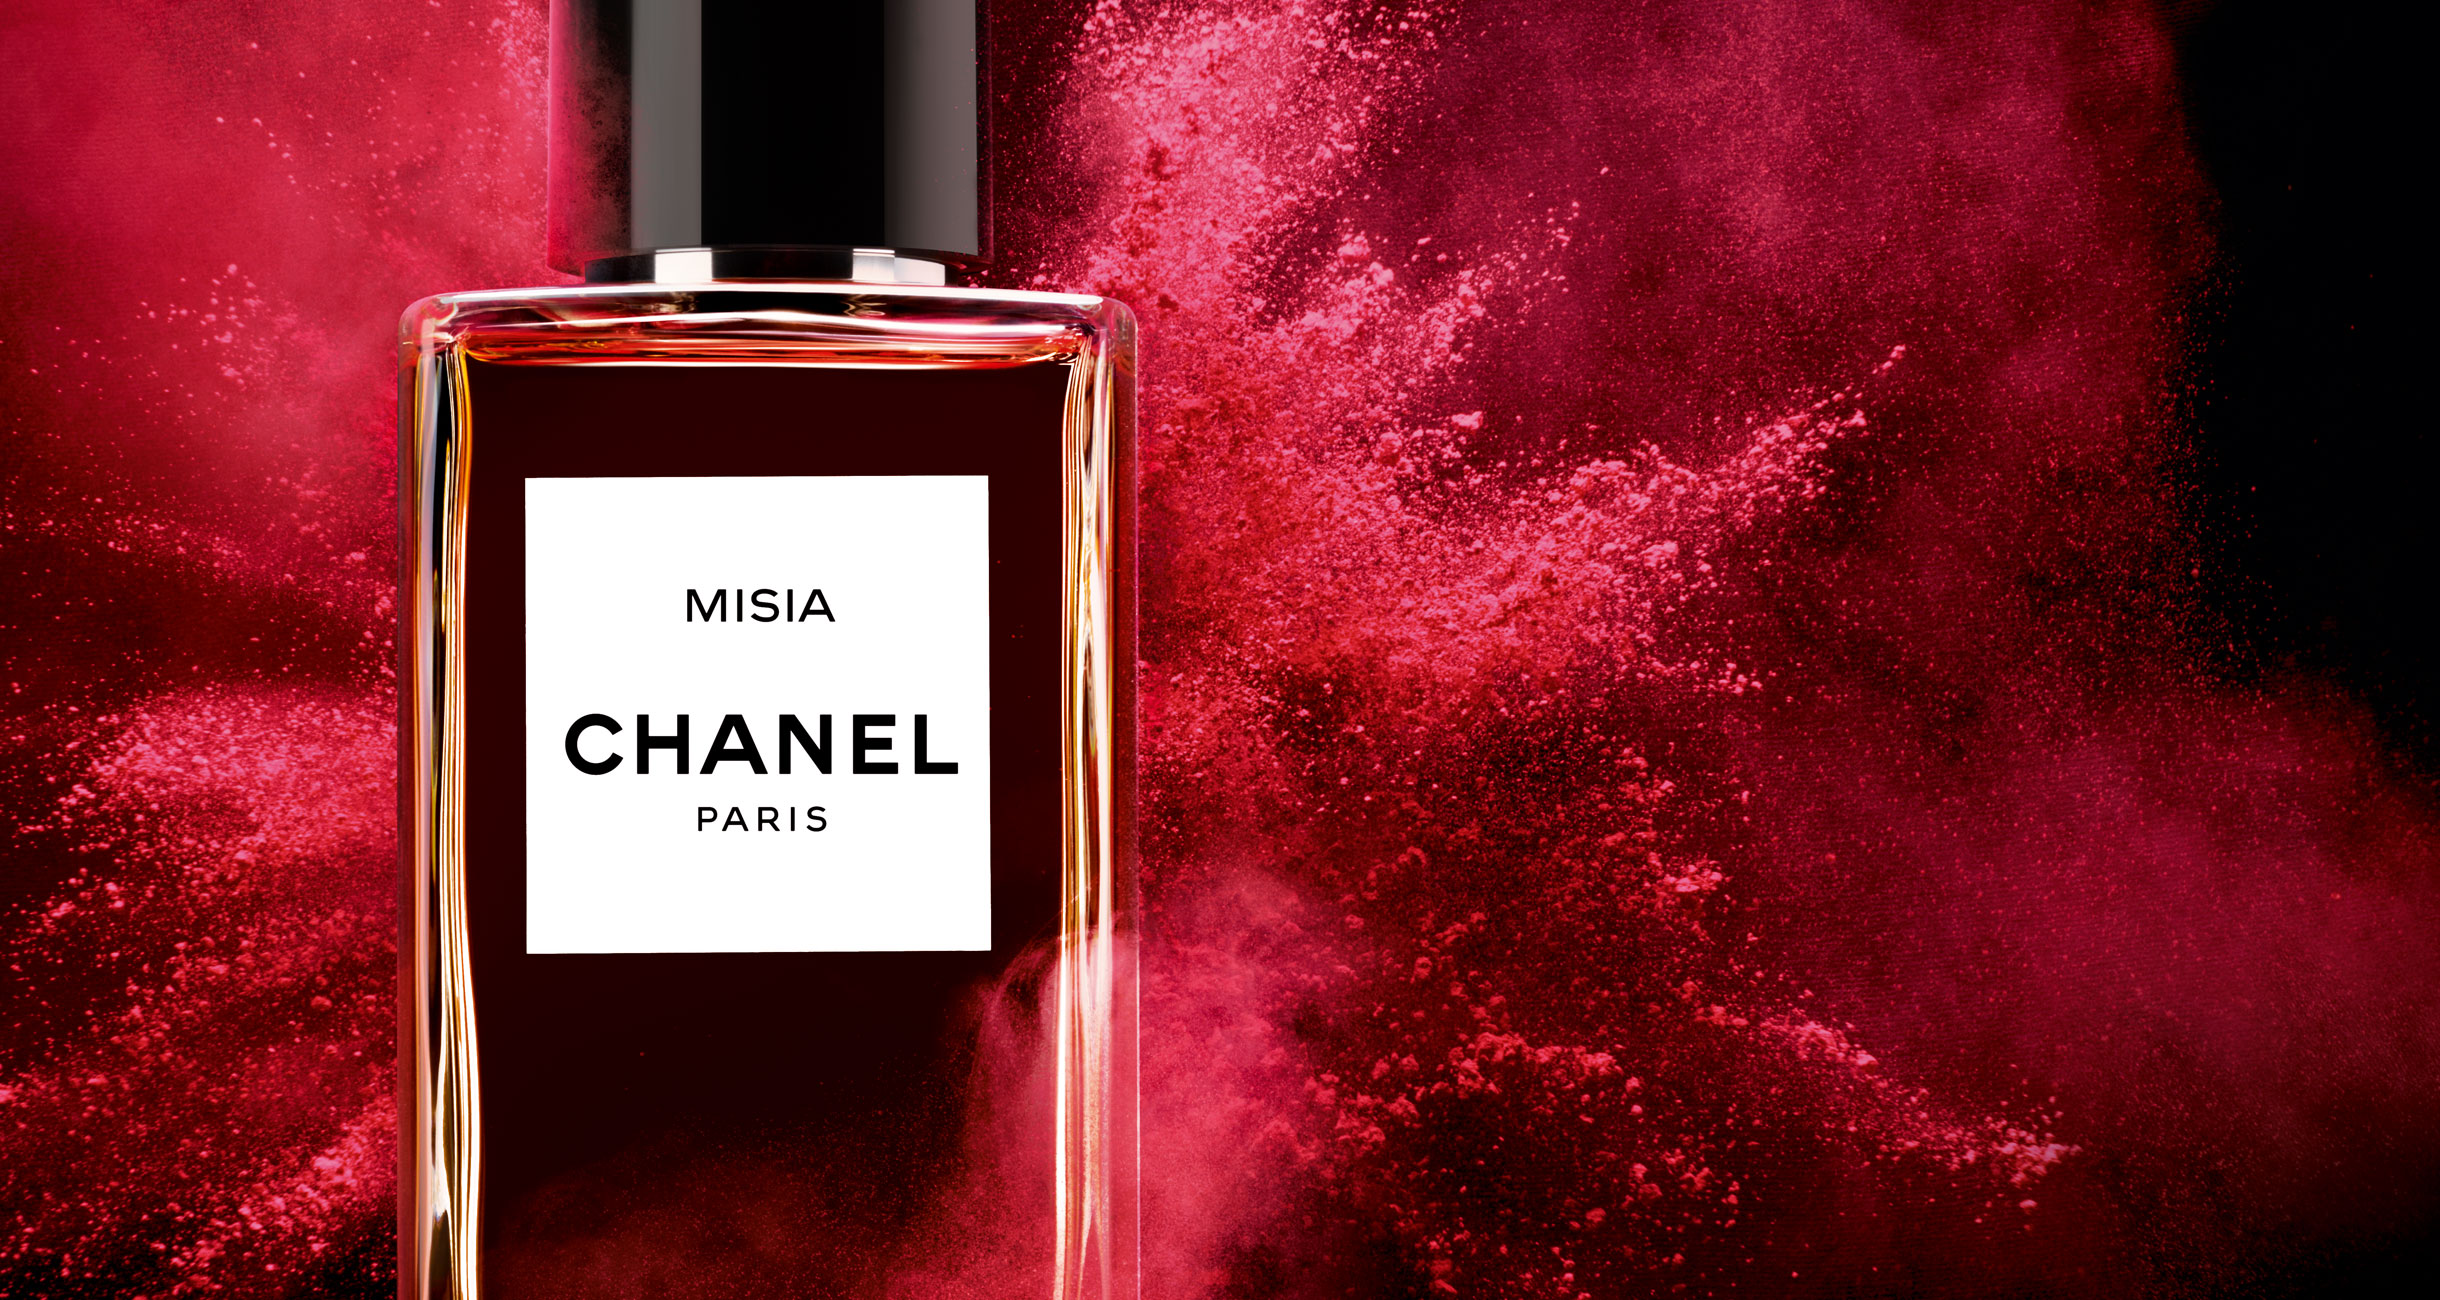 Chanel: The Scent of Misia